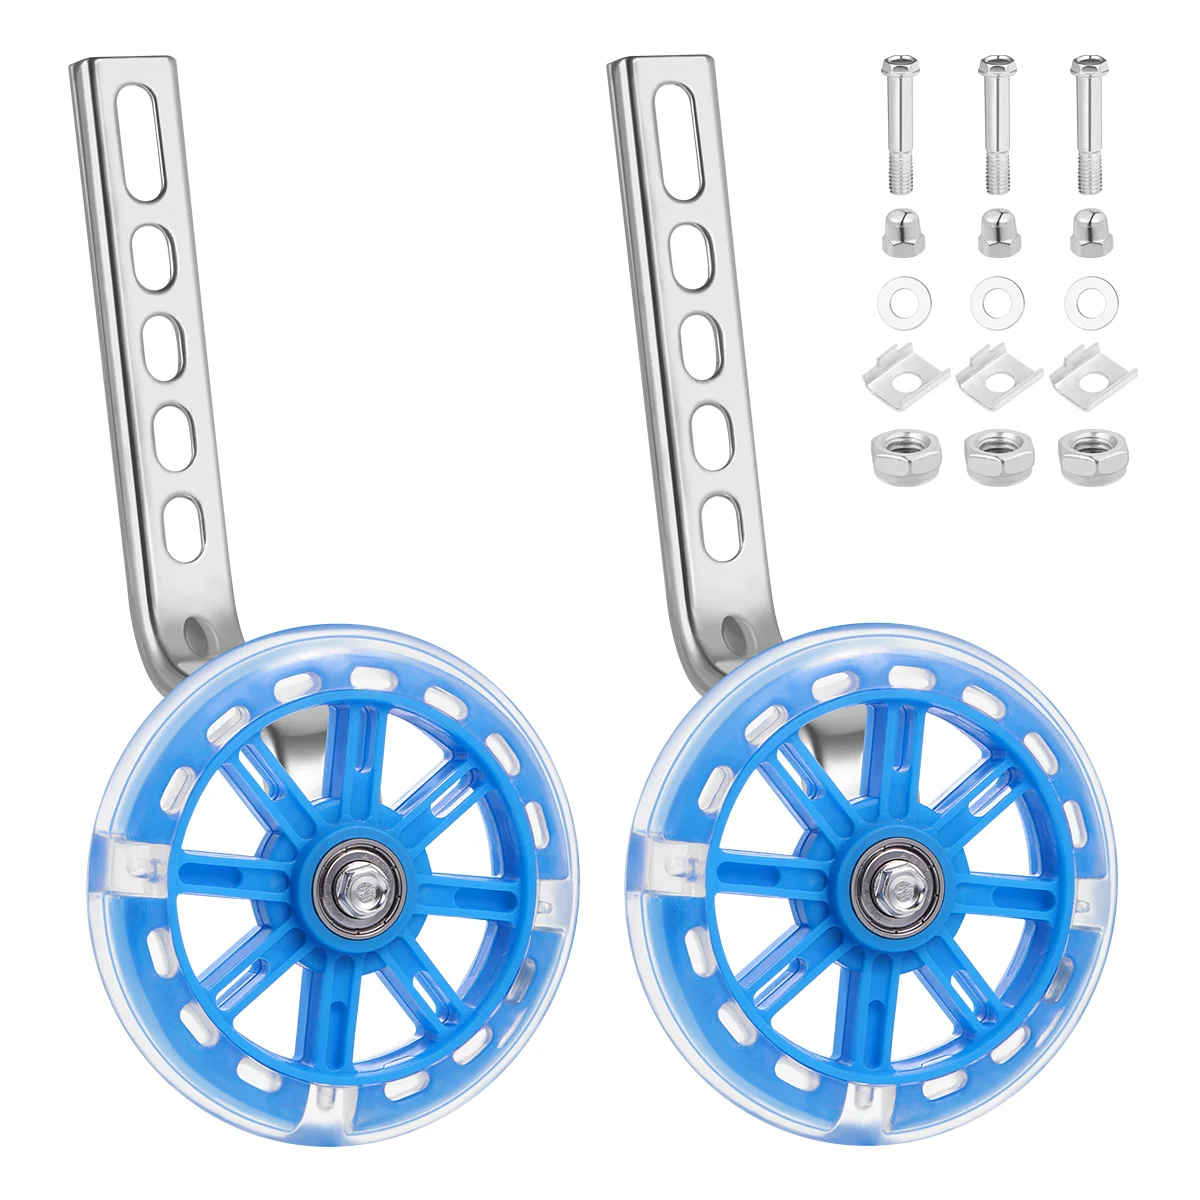 

Clispeed 2PCS 4.5in Adjustable Glowing Auxiliary Training Wheels Children Balance Stabilizer Wheels Blue